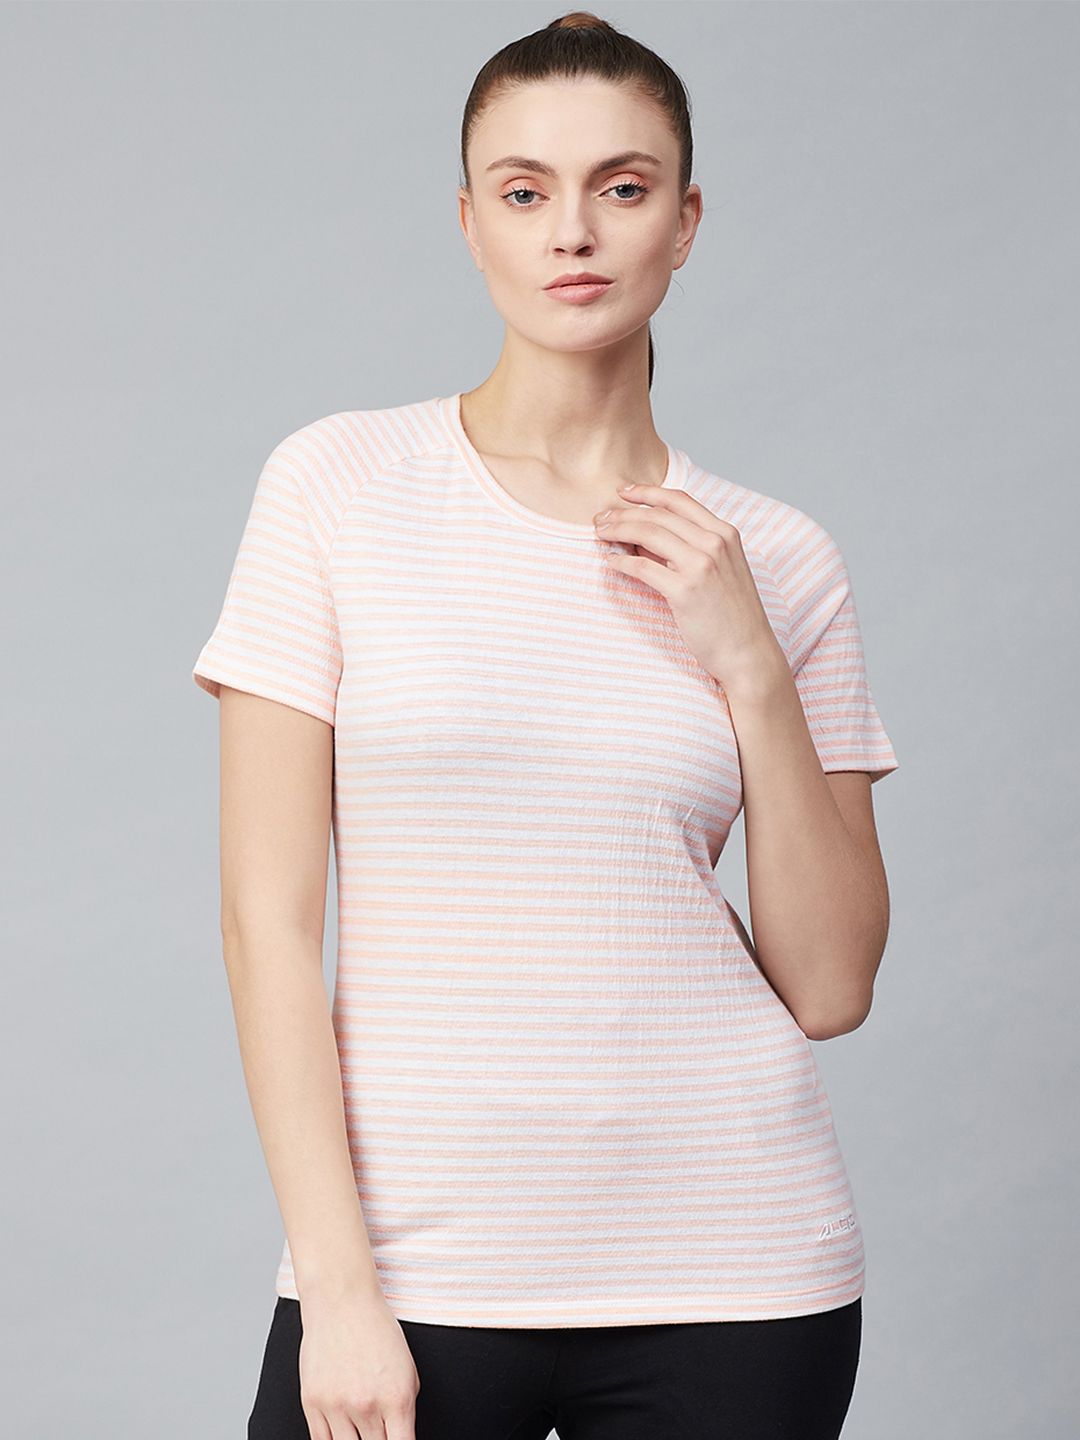 Alcis Women Peach-Coloured & White Striped Round Neck T-shirt Price in India